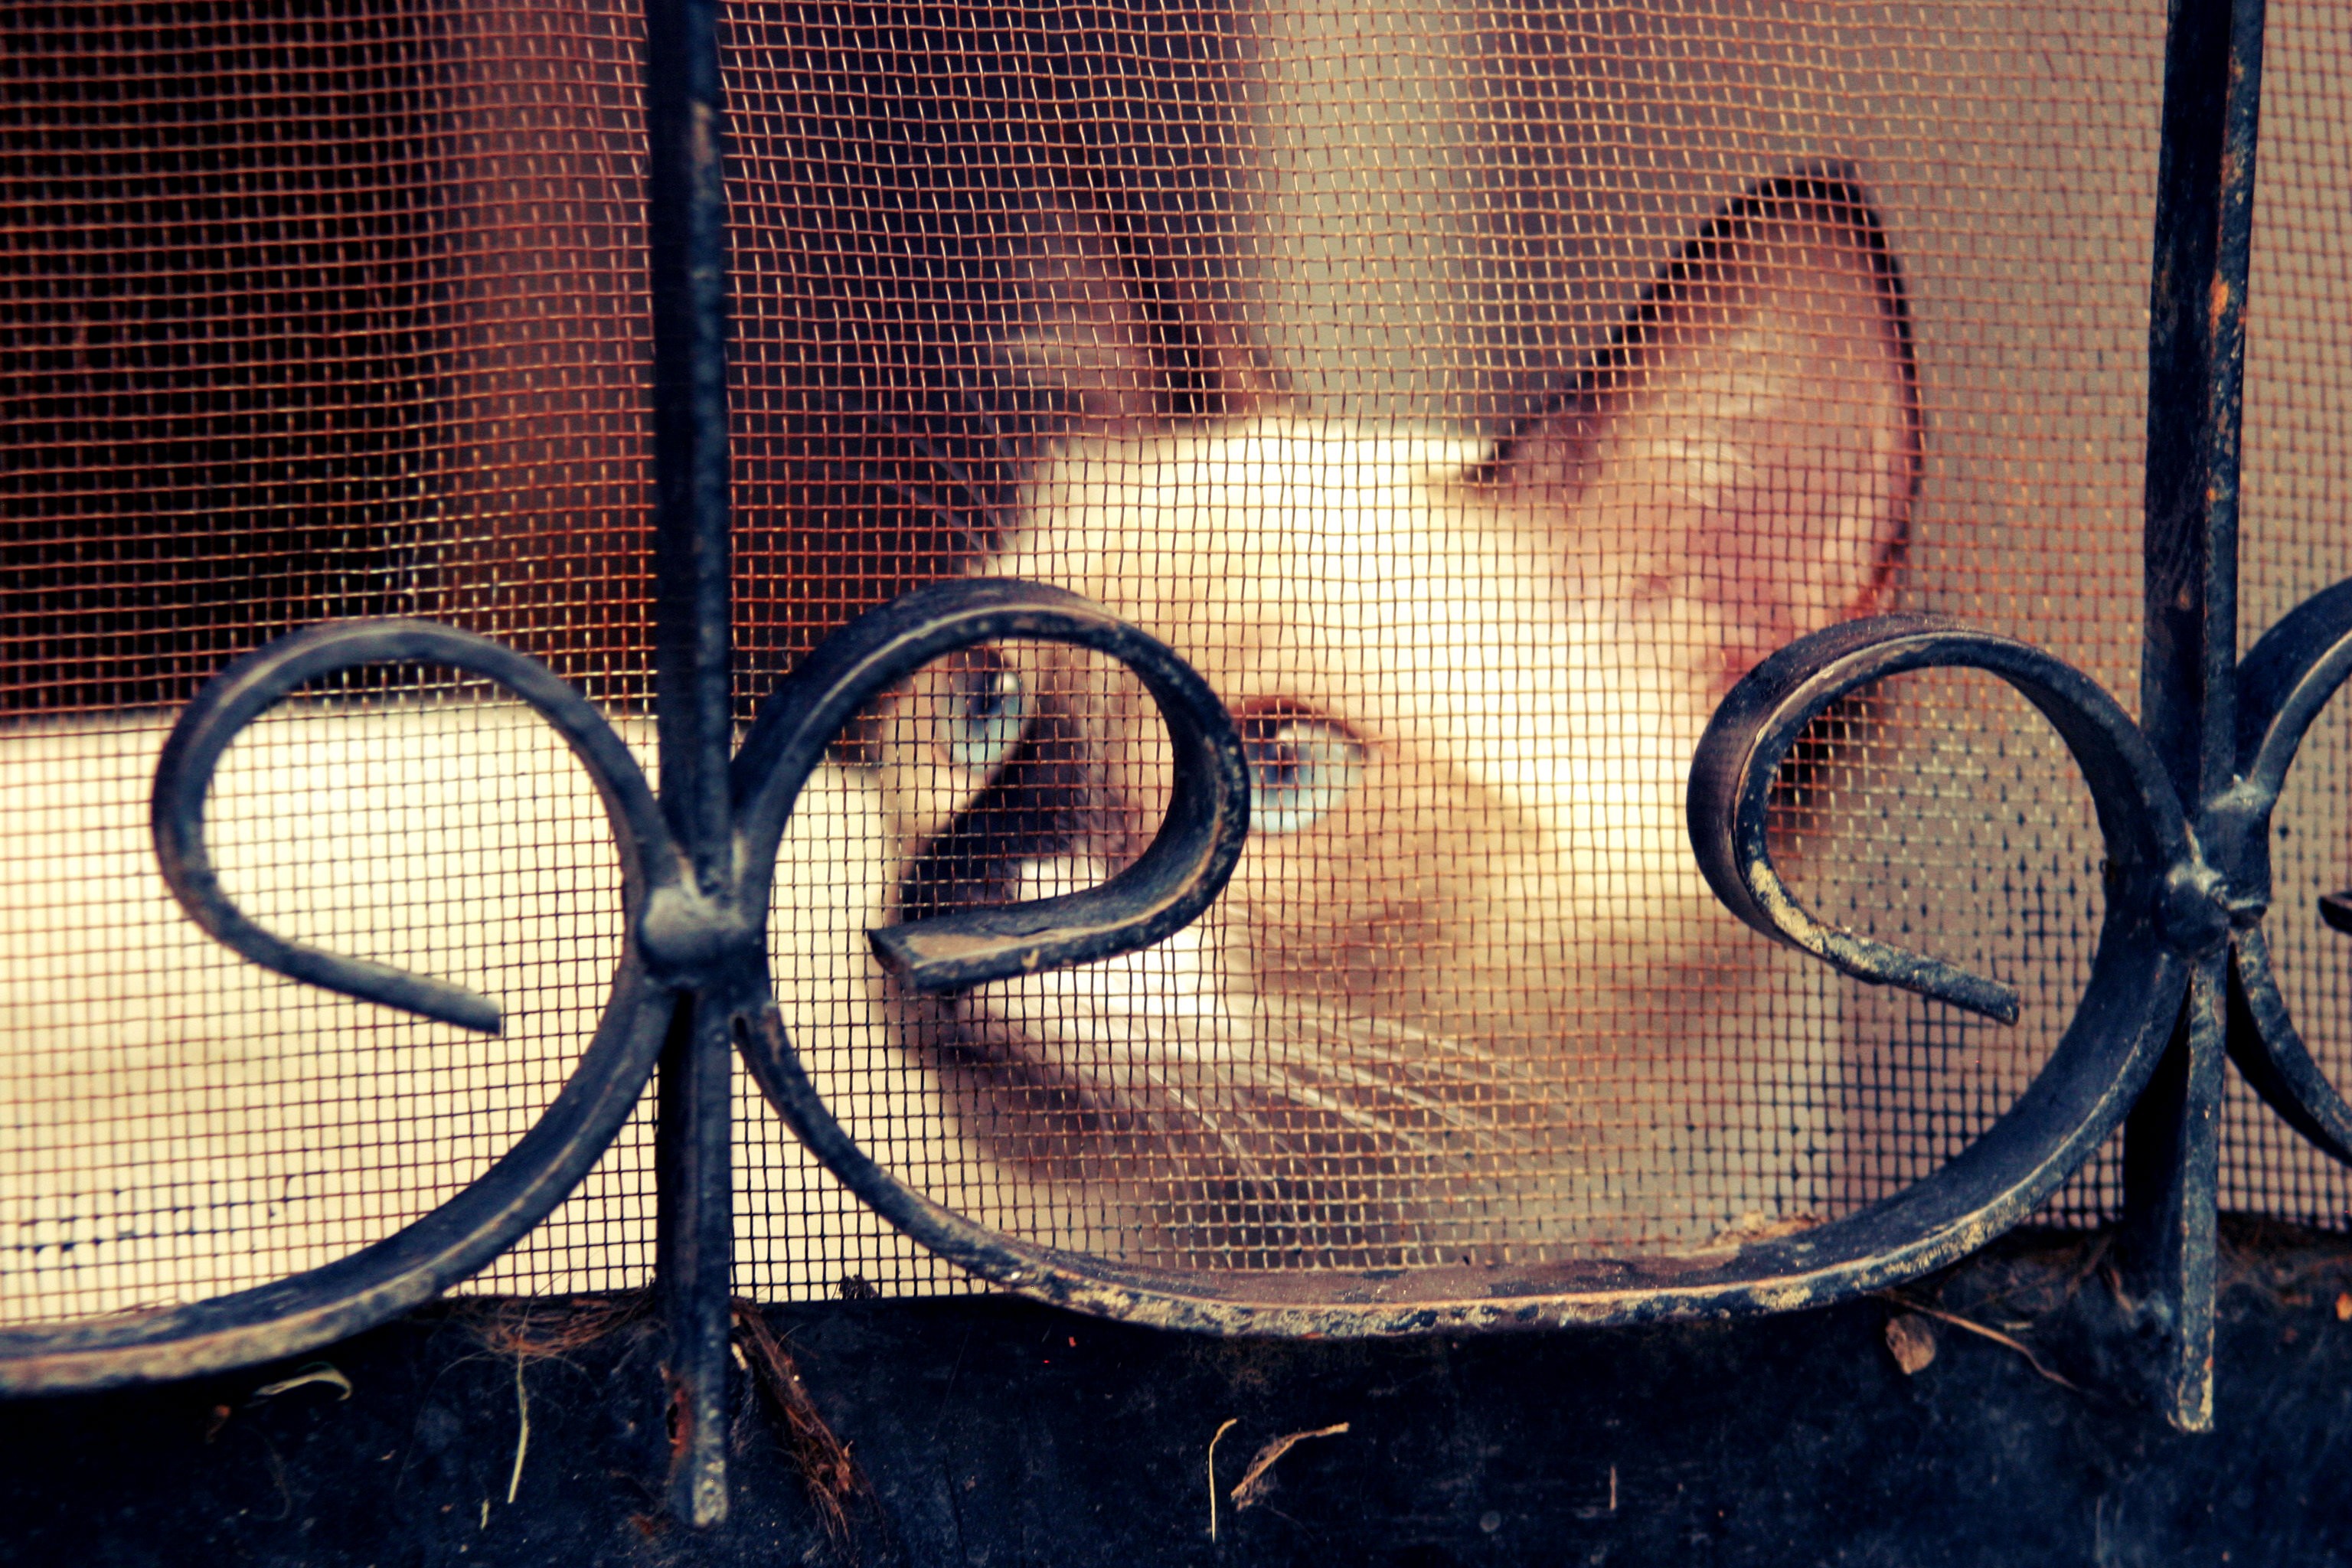 cats, blue eyes, animals - desktop wallpaper